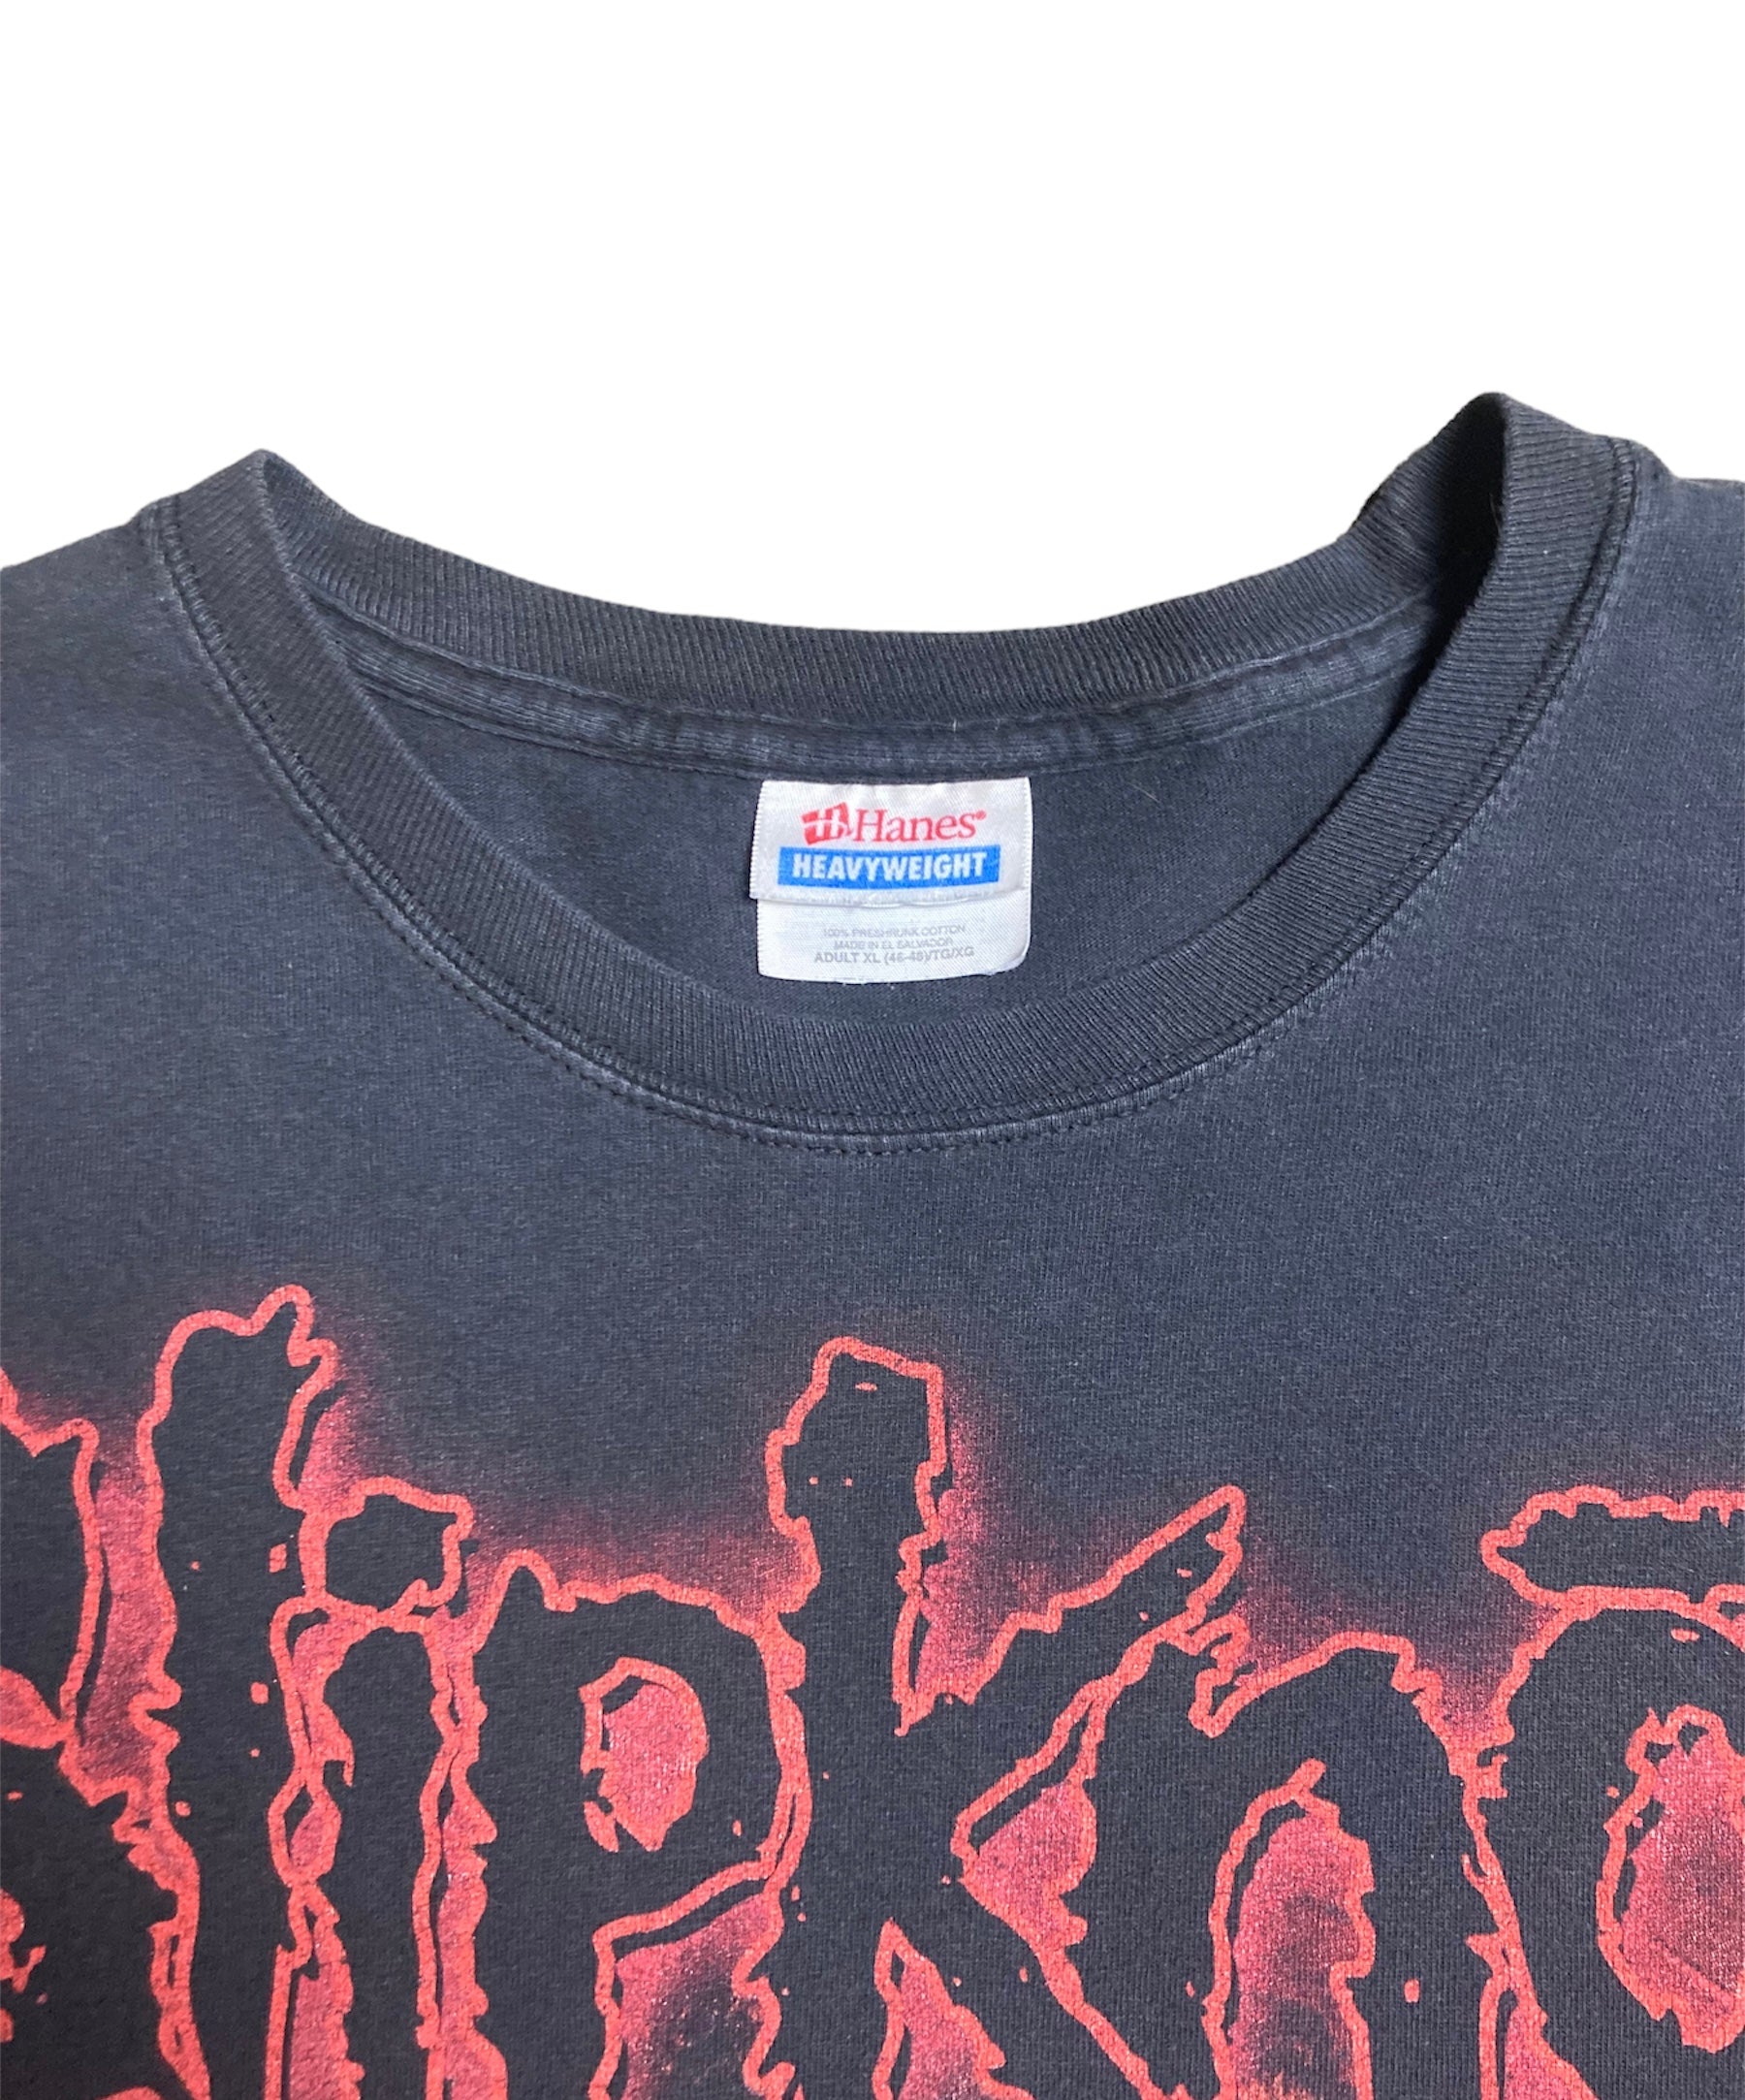 Vintage Slipknot Band T Shirt – Mill Street Vintage